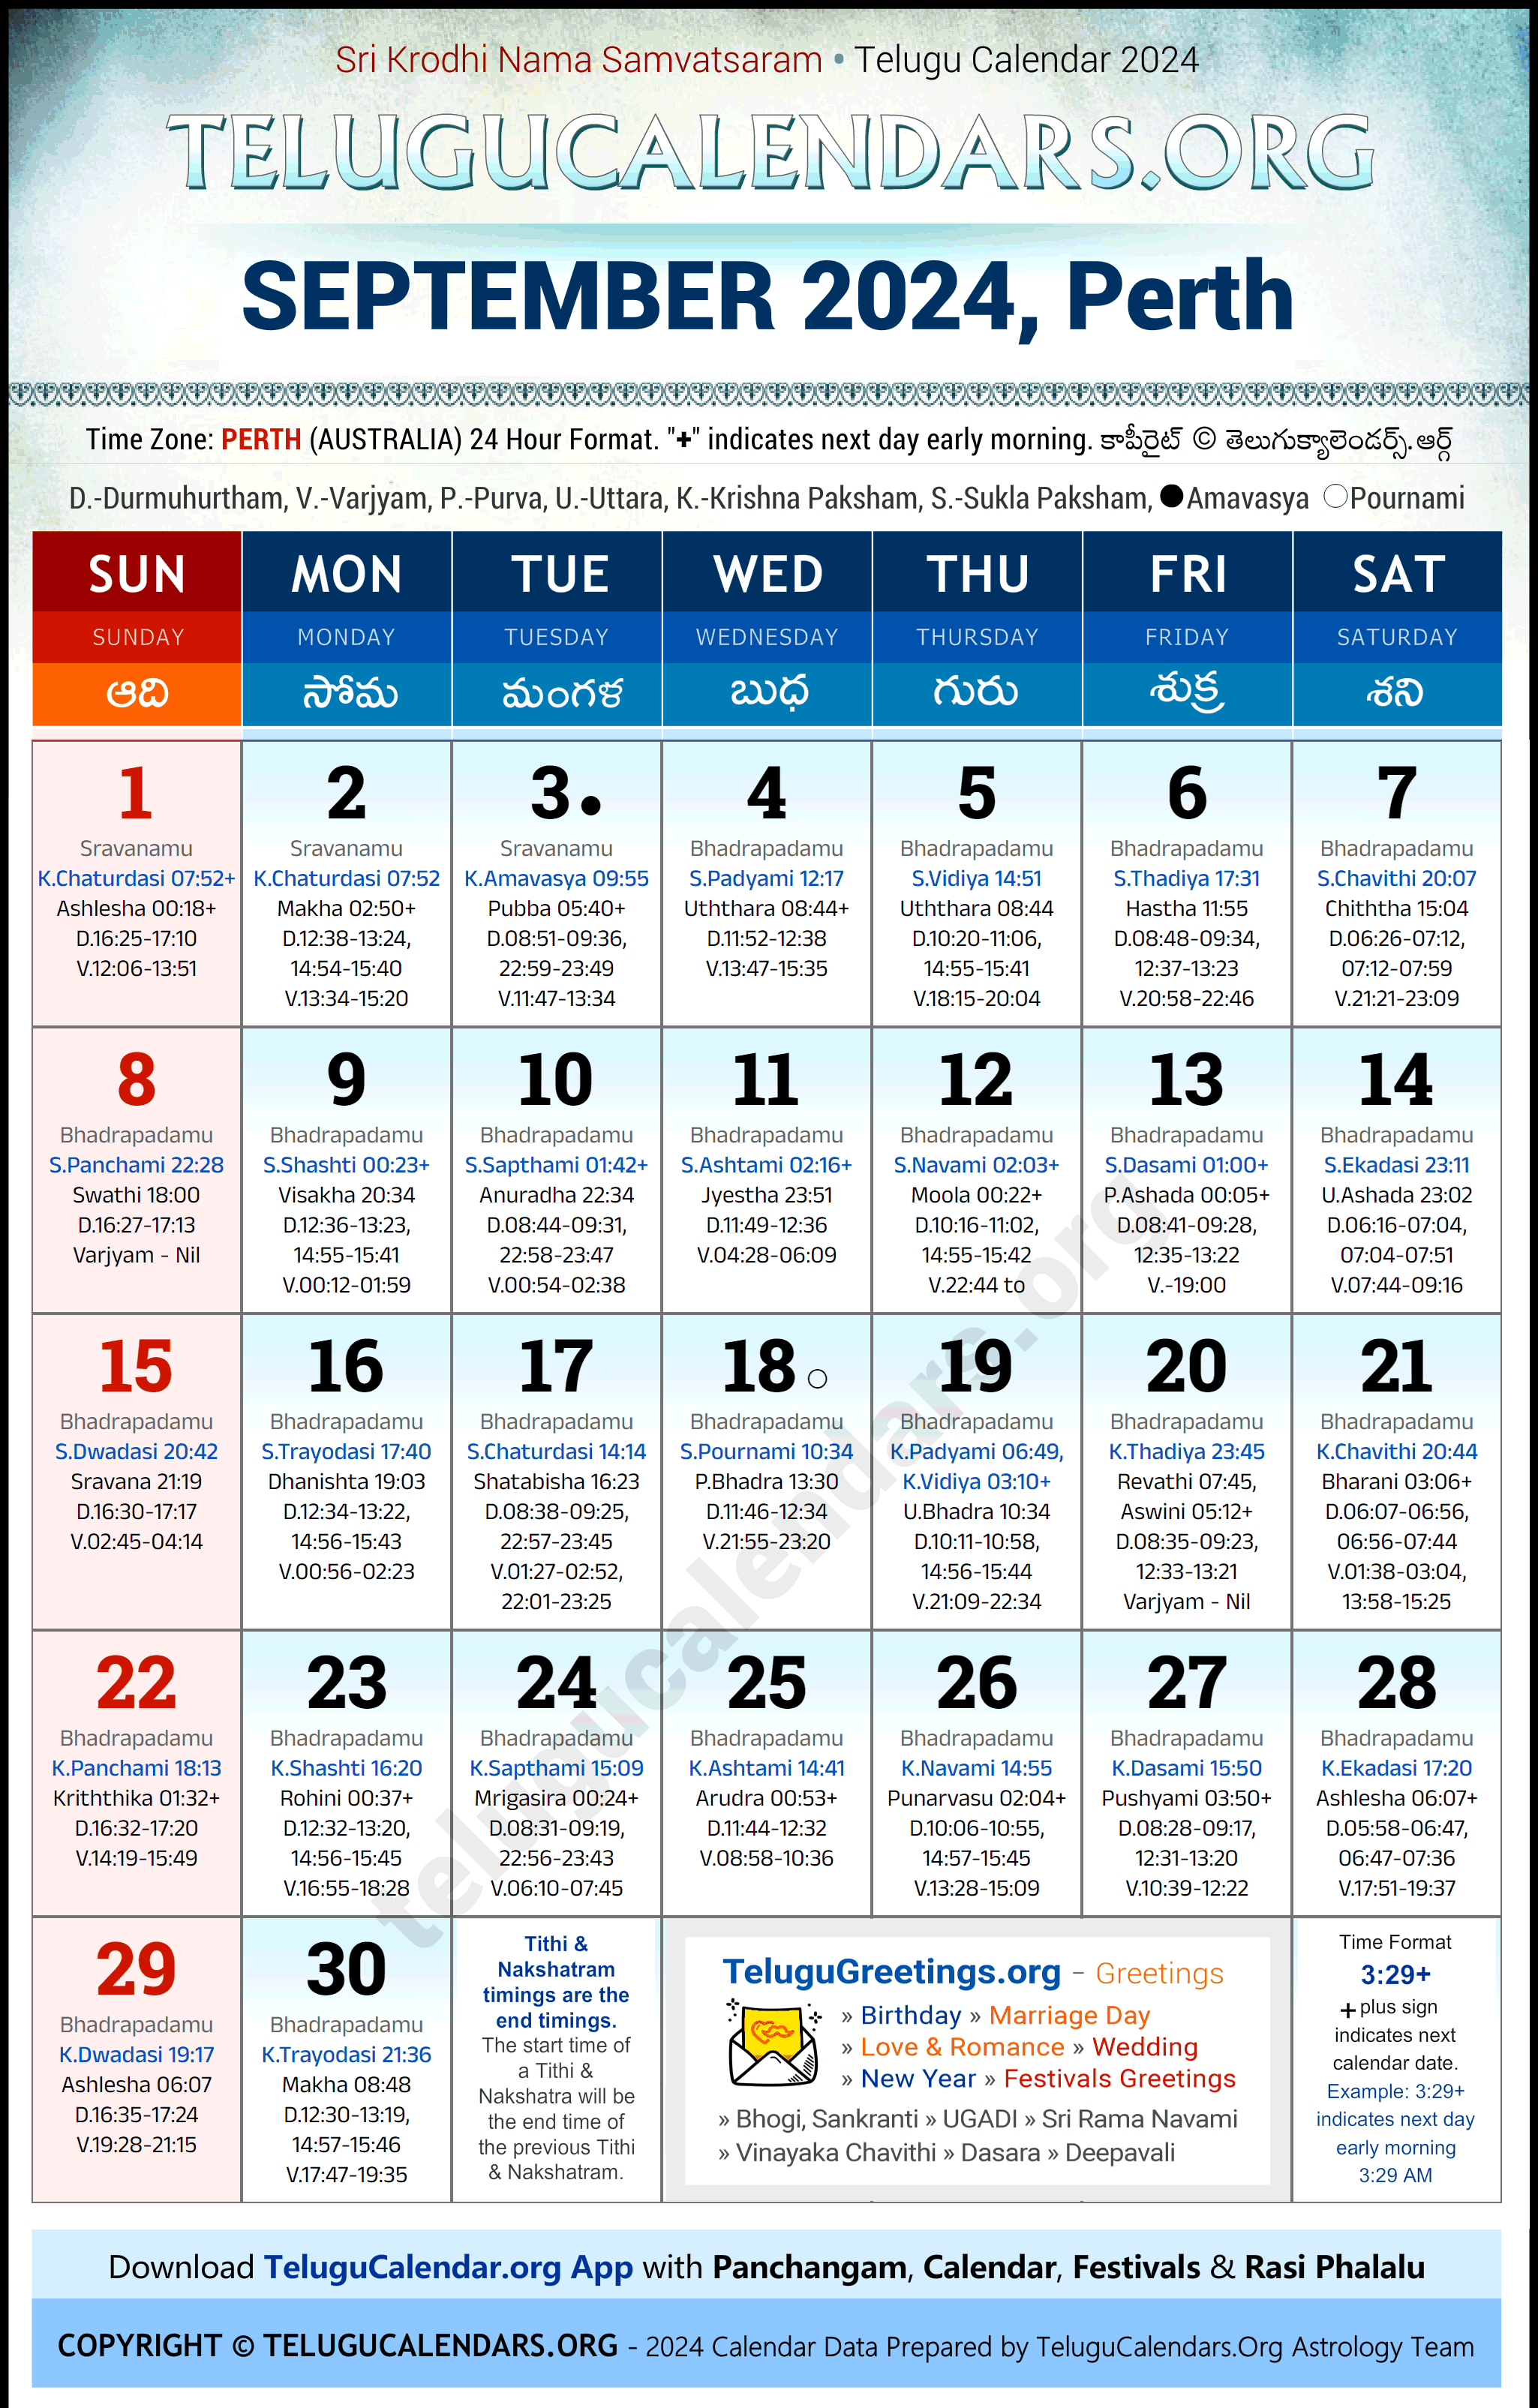 Telugu Calendar 2024 September Festivals for Perth